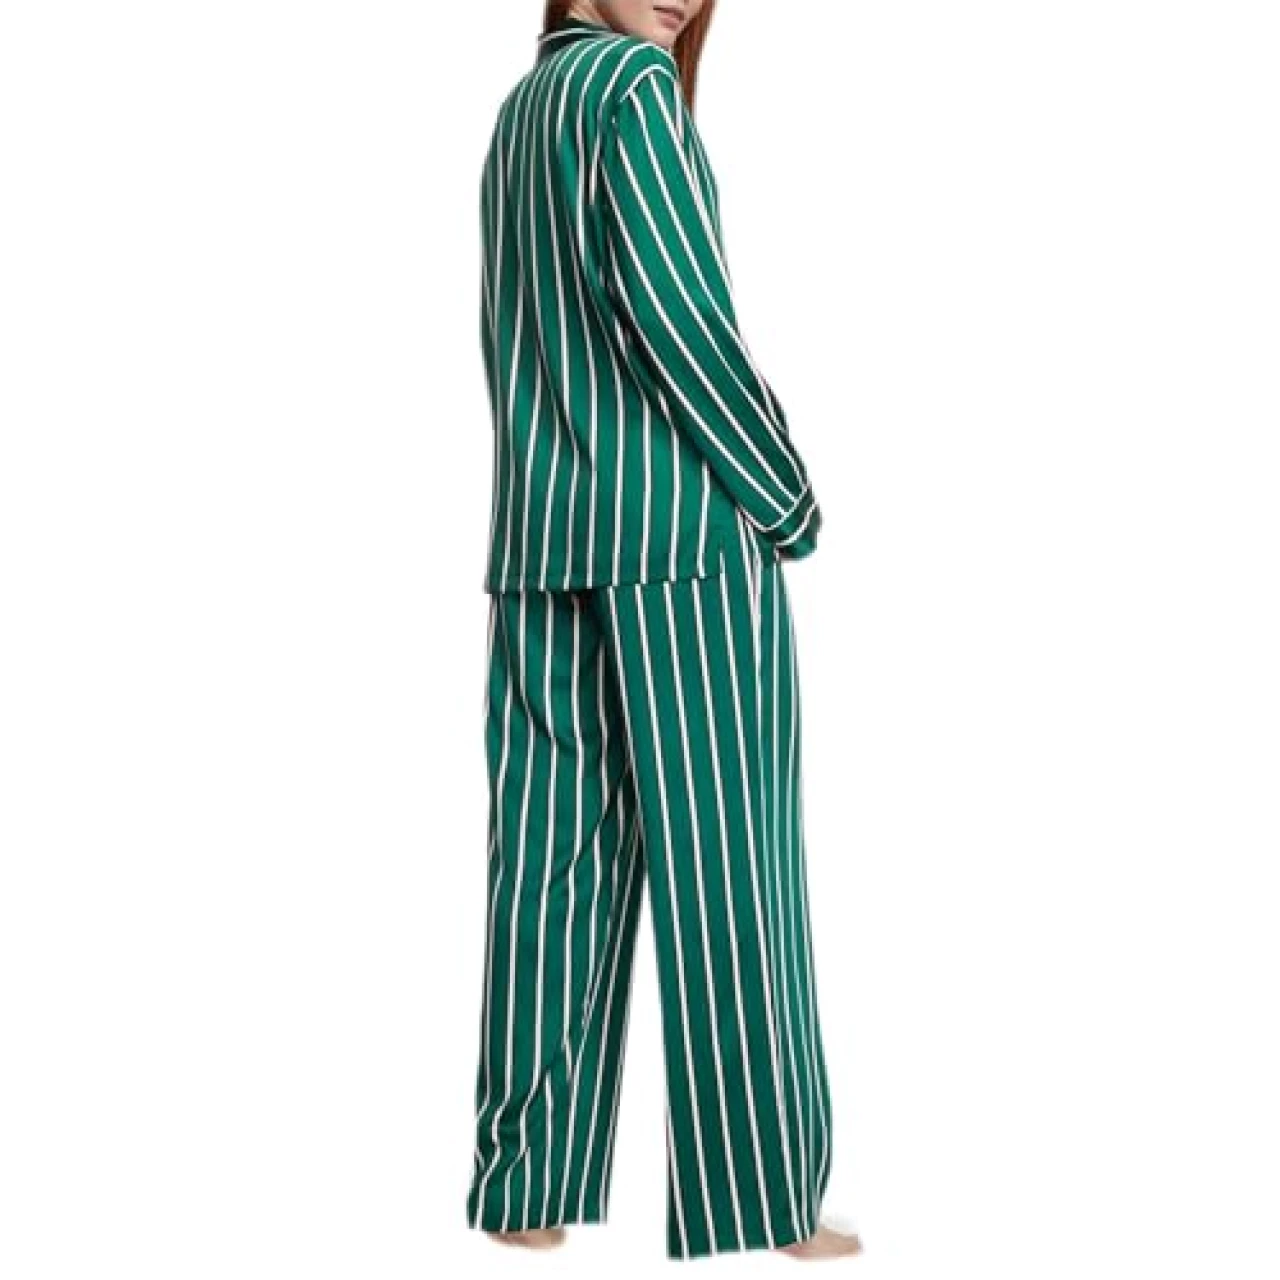 Victoria&rsquo;s Secret Satin Long Pajama Set, Silk Pajamas, PJ Set for Women, 2 Piece Lounge Set Silk PJs, Women&rsquo;s Sleepwear, Green (M)